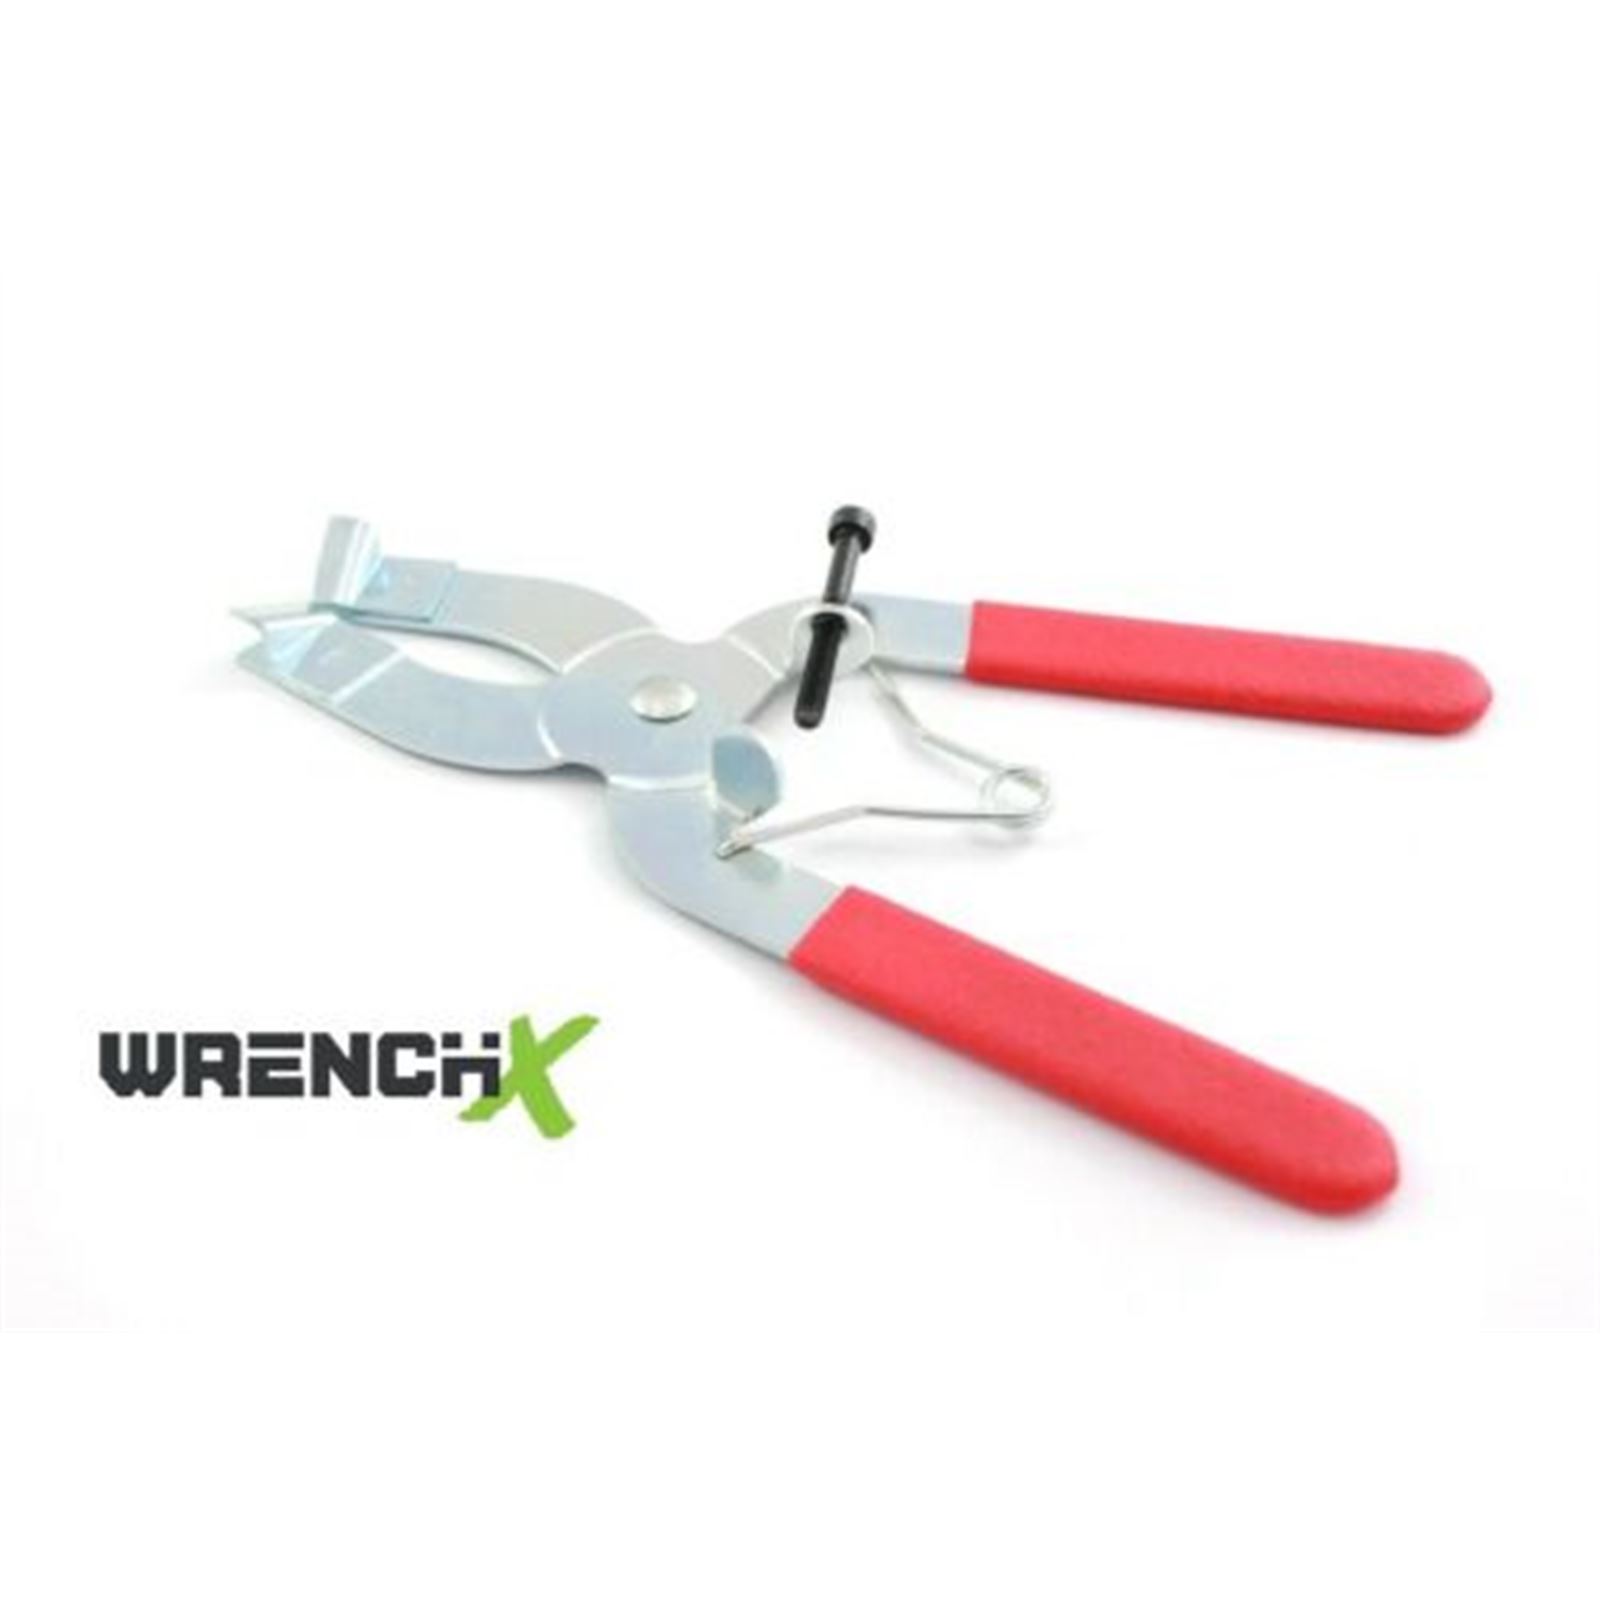 Wrench-X Products - Motorcycle, ATV / UTV & Powersports Parts